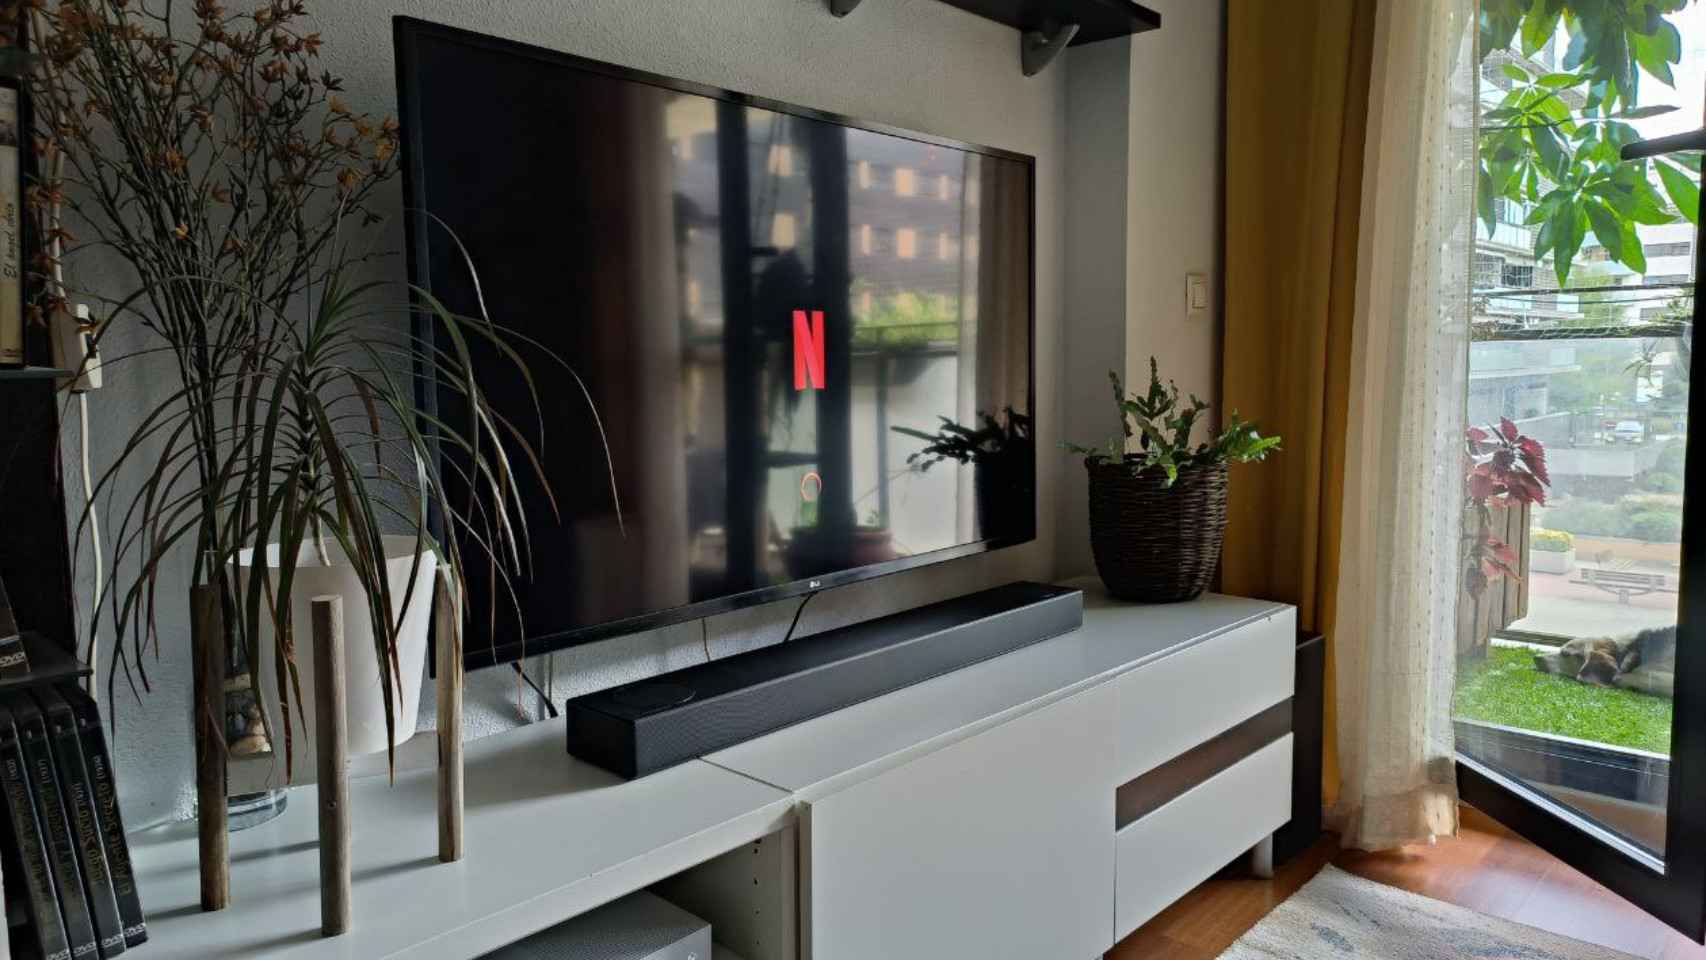 El tamaño de la LG S75Q es ideal para televisores de 50 pulgadas